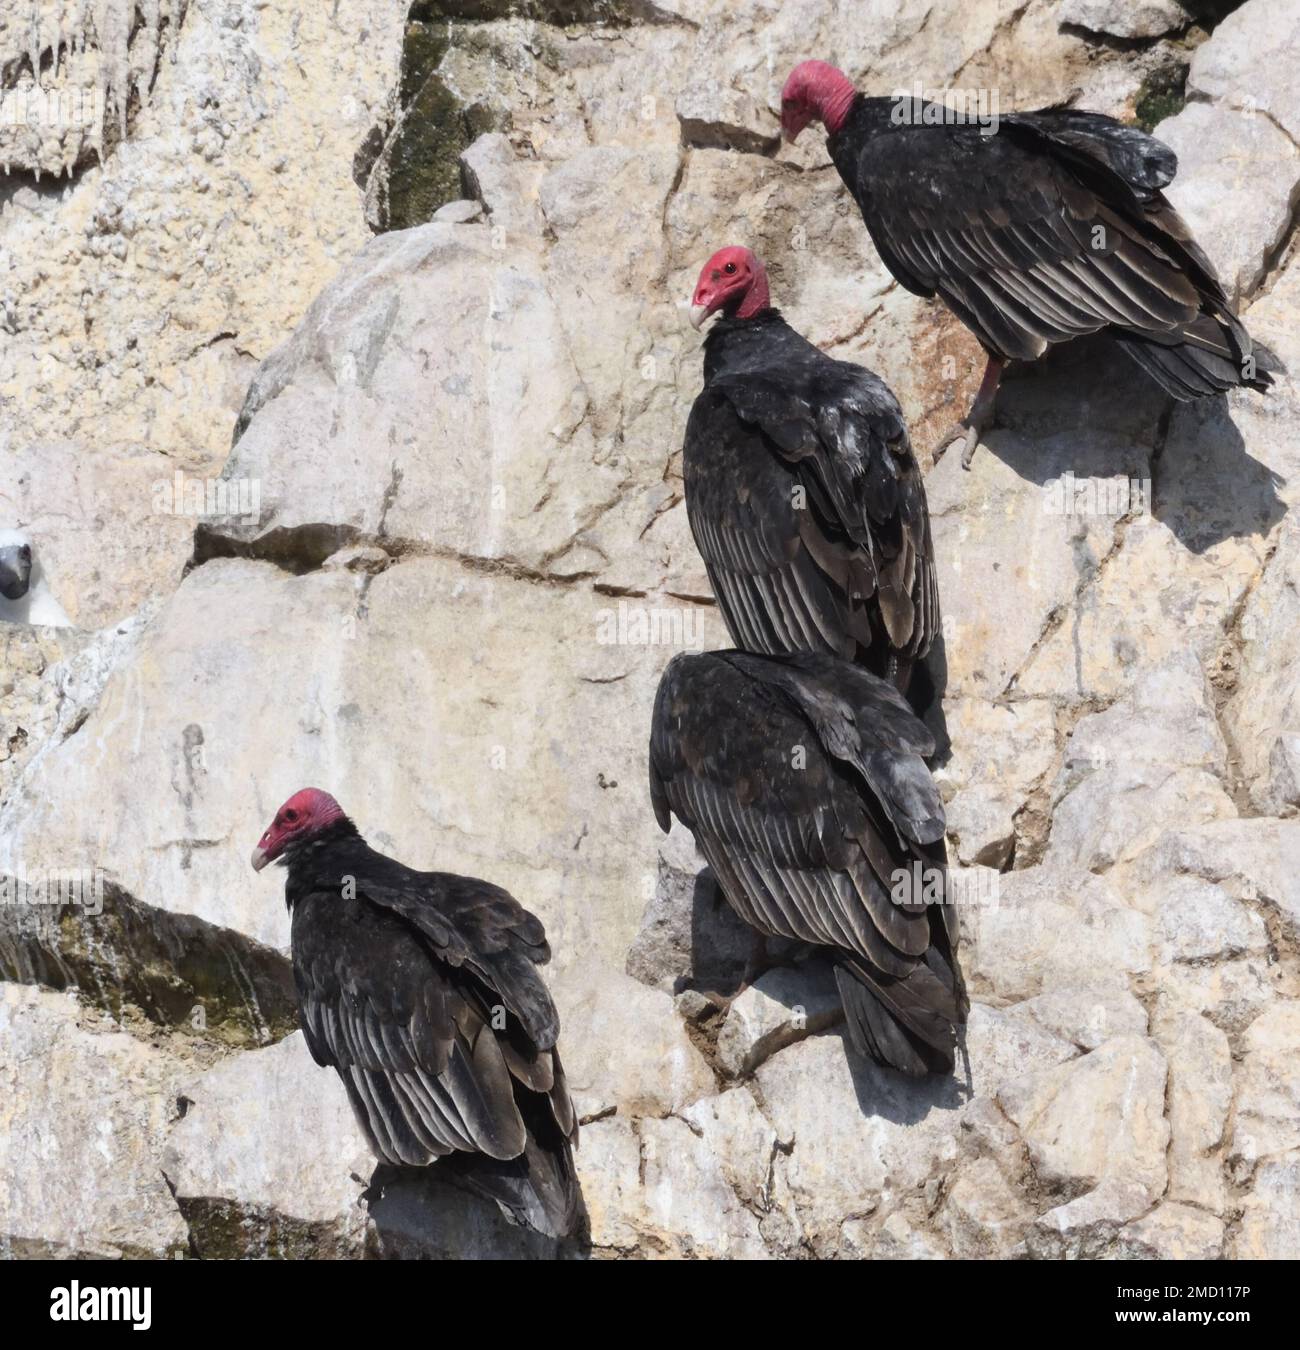 Four turkey vultures (Cathartes aura)  on the guano covered cliffs of the Ballestas Islands. Ballestas Islands,Paracas, Peru. Stock Photo